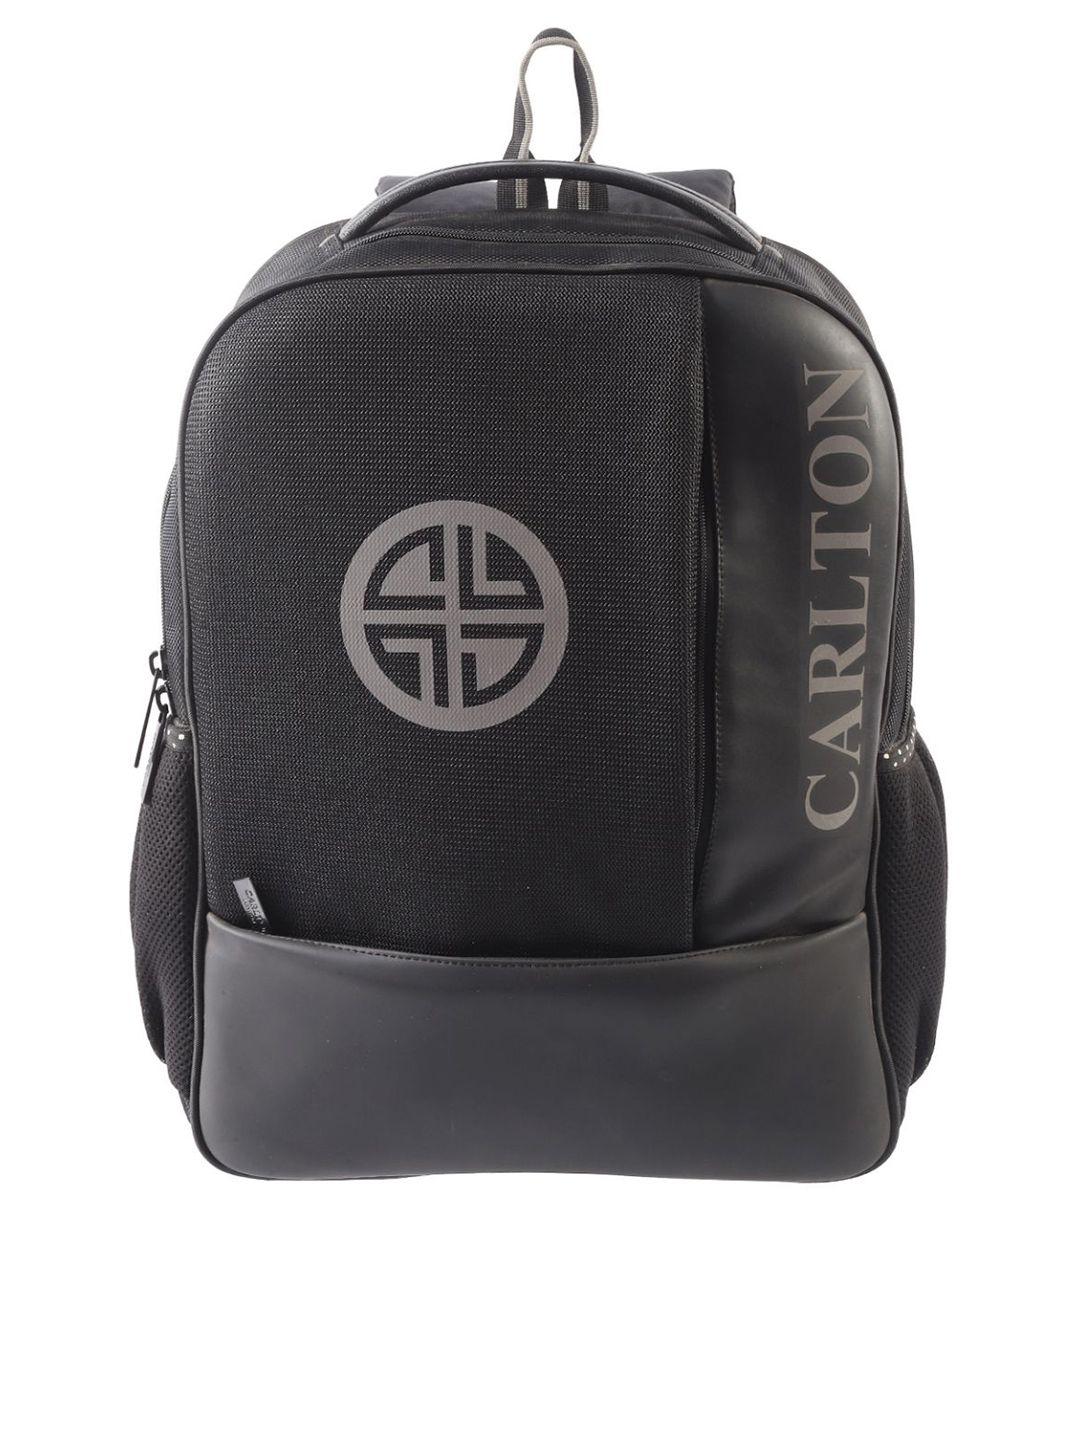 carlton london brand logo printed ergonomic water resistant backpack